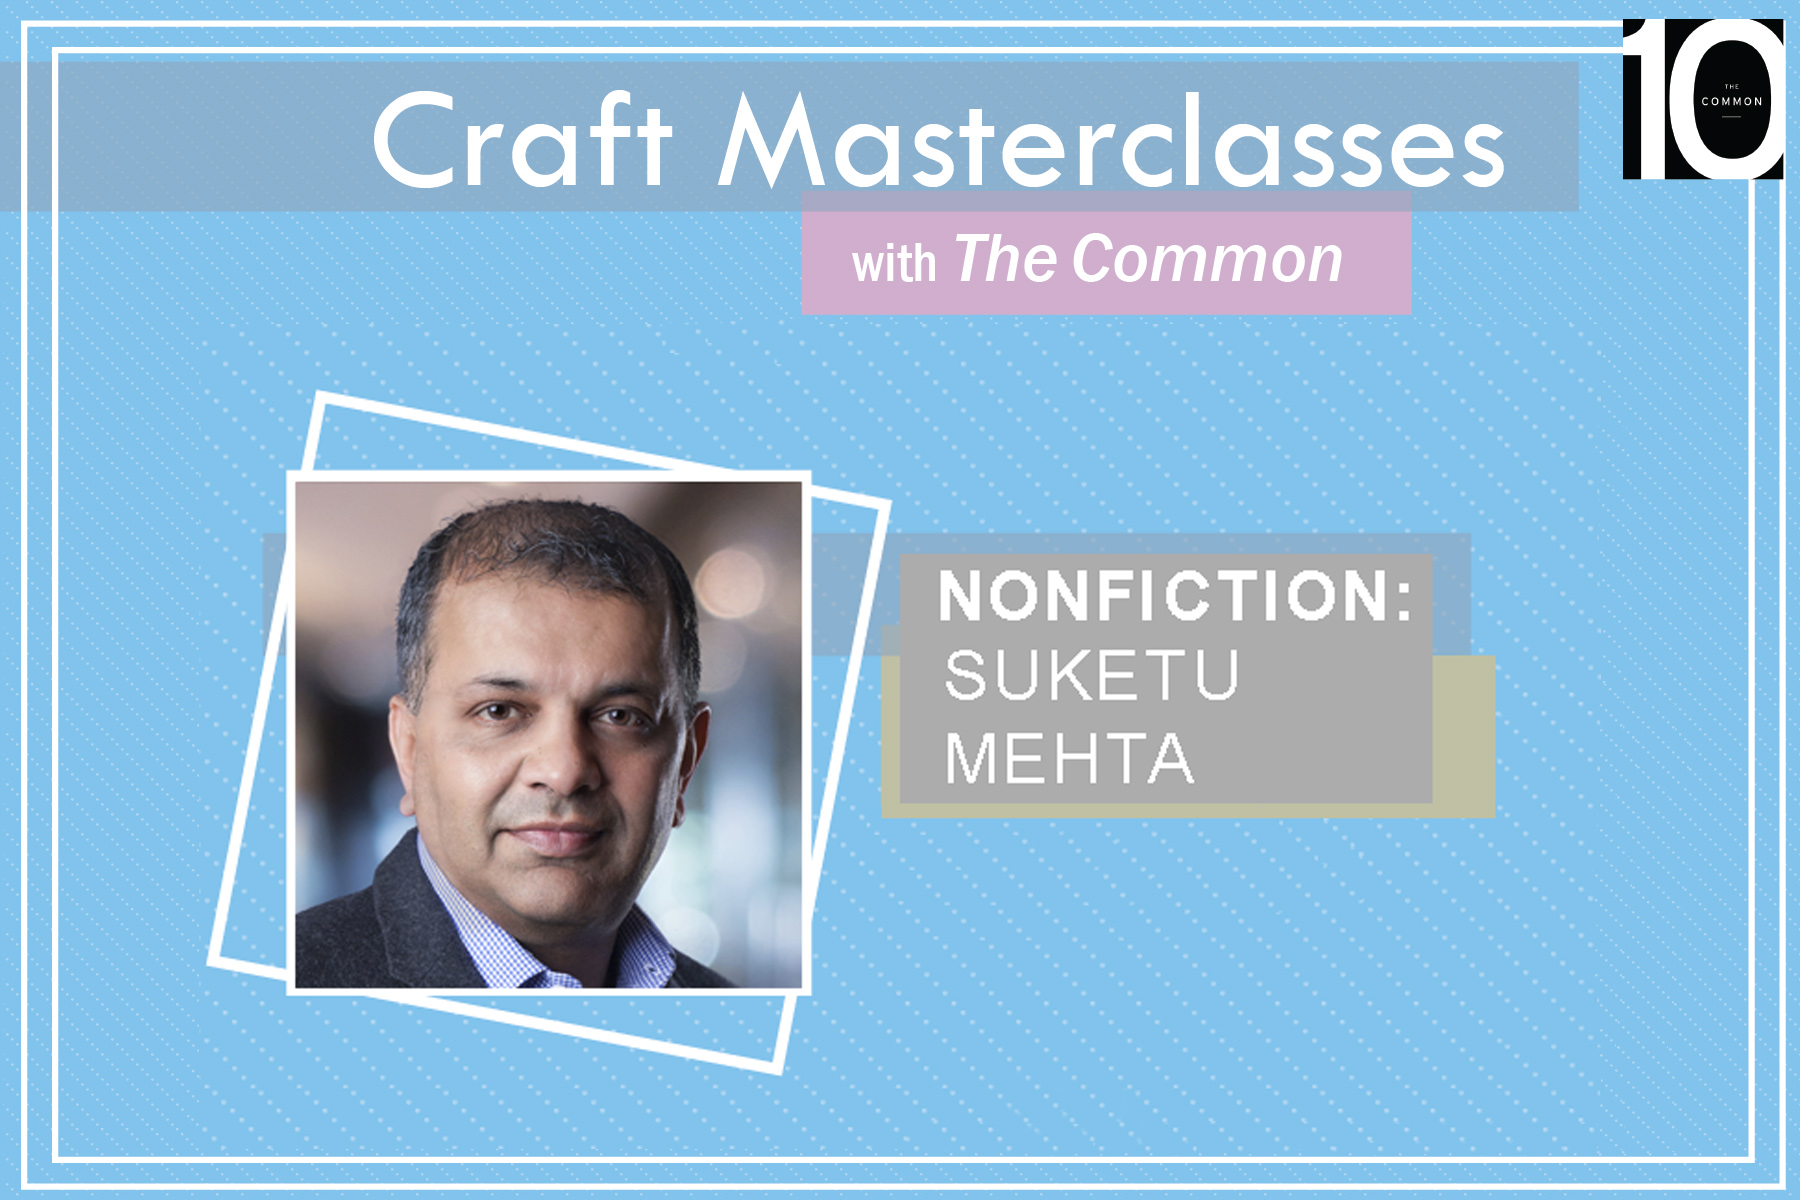 Suketu Mehta headshot with text: Craft Masterclasses with The Common